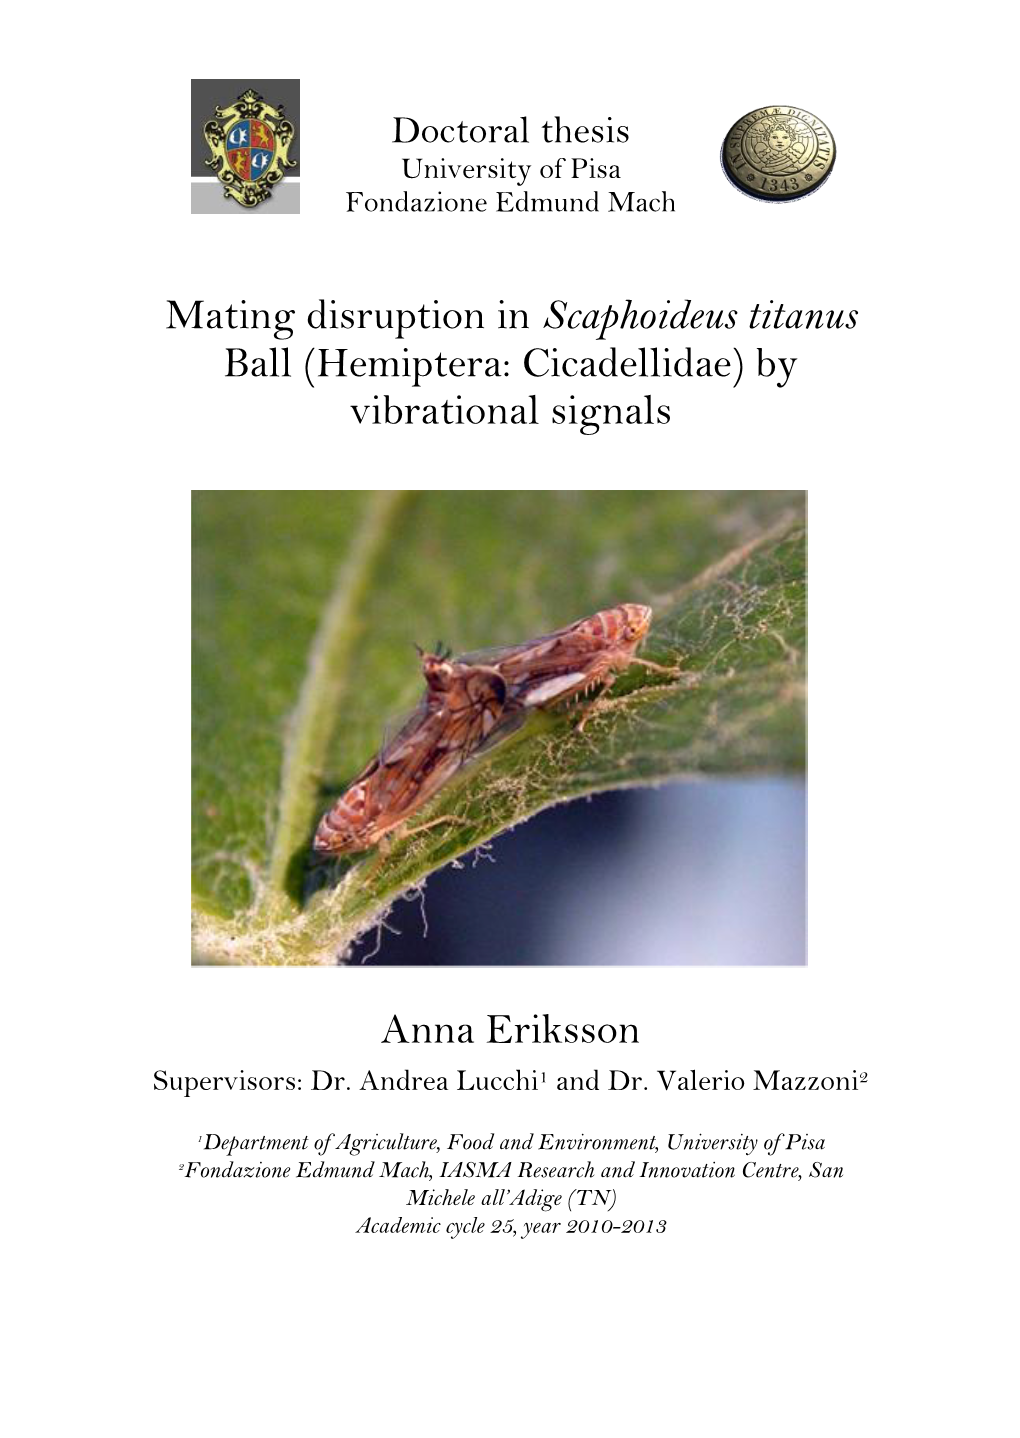 Mating Disruption in Scaphoideus Titanus Ball (Hemiptera: Cicadellidae) by Vibrational Signals